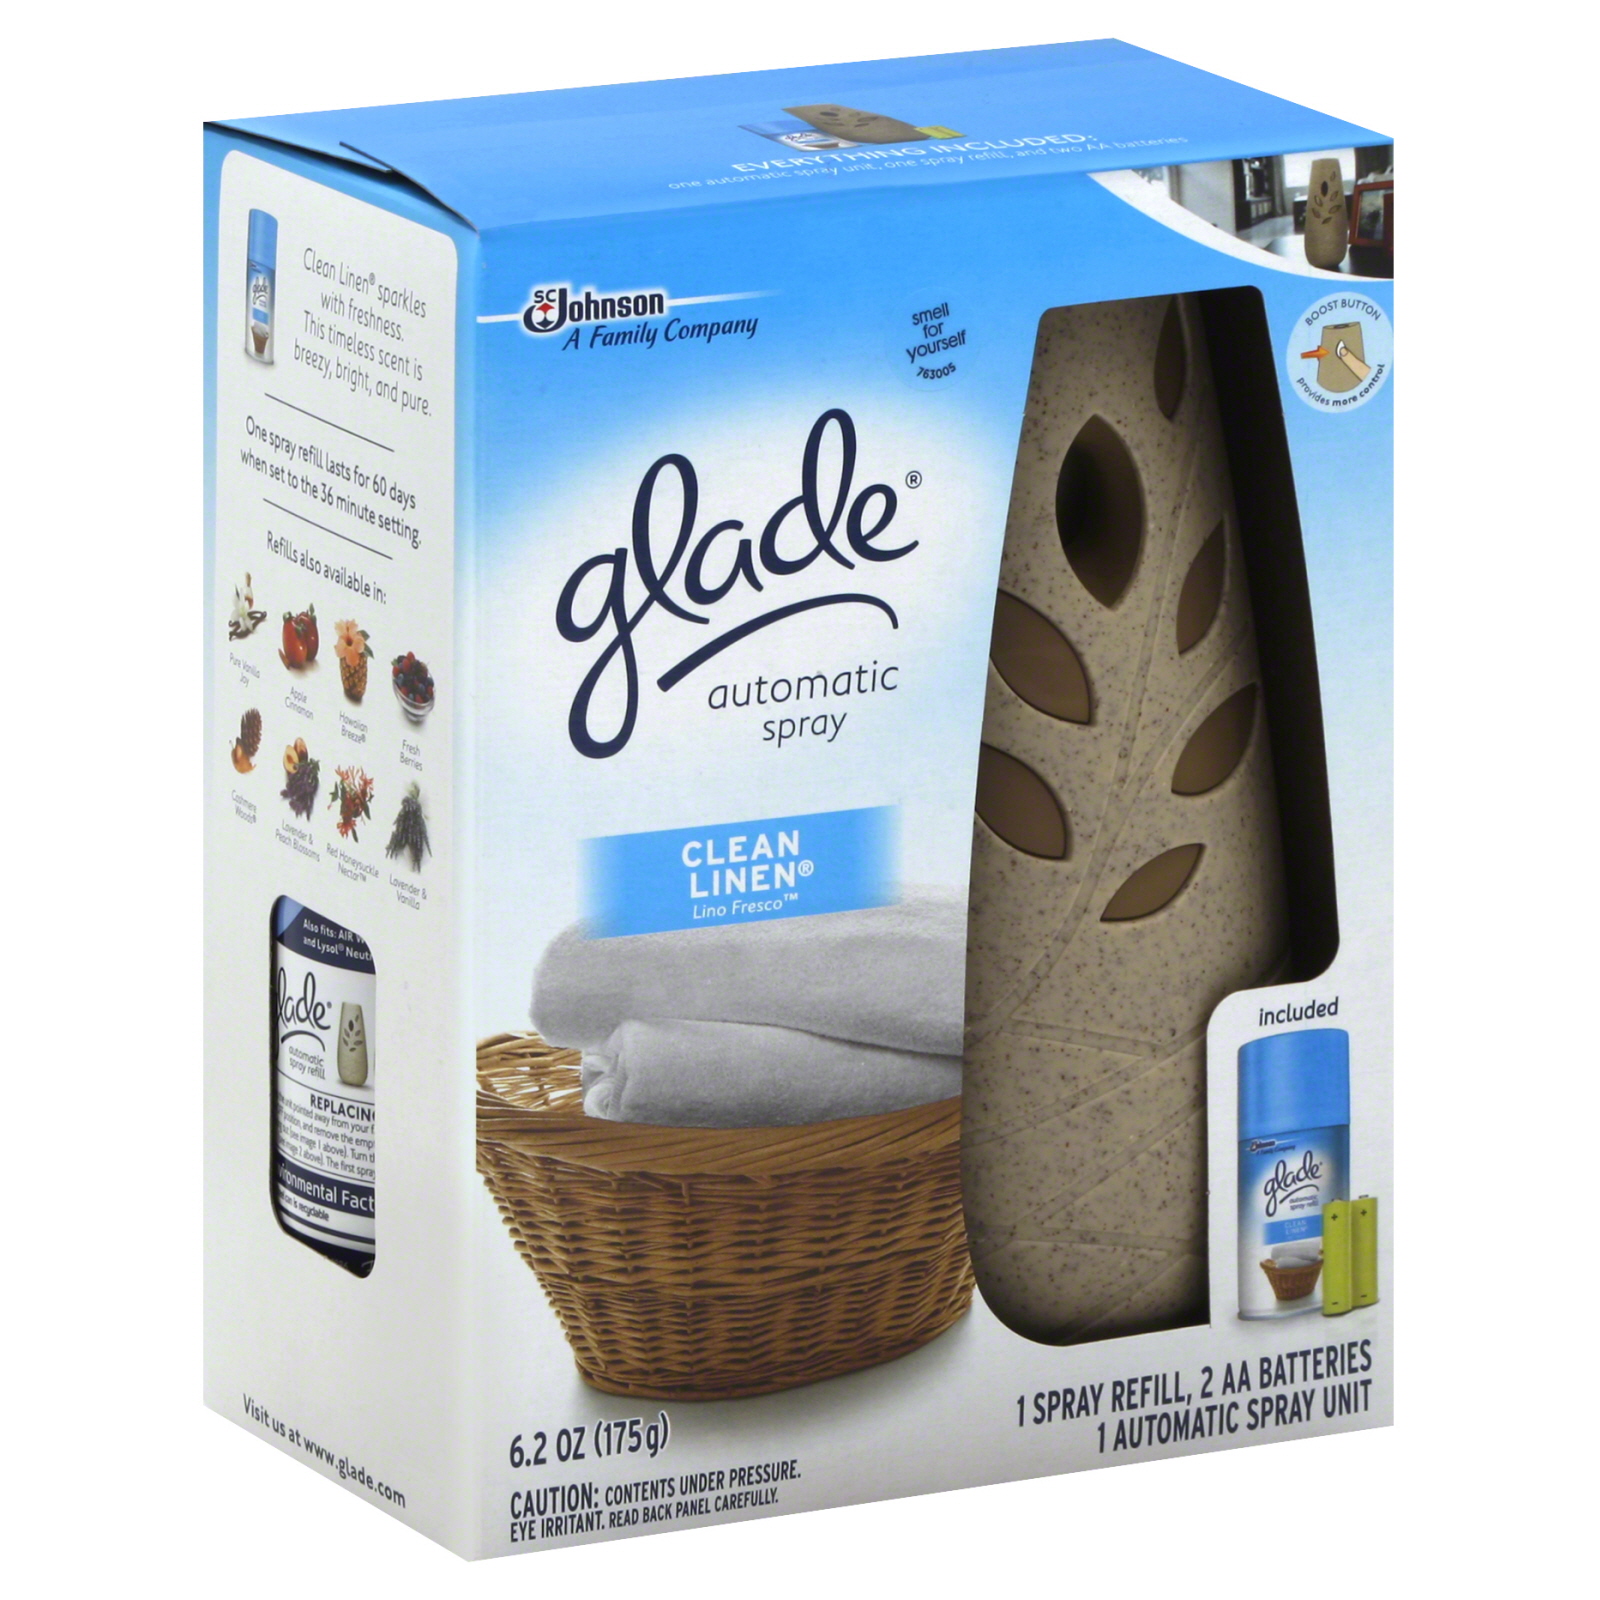 Glade Automatic Spray Starter Kit, Clean Linen - 6.2 oz.